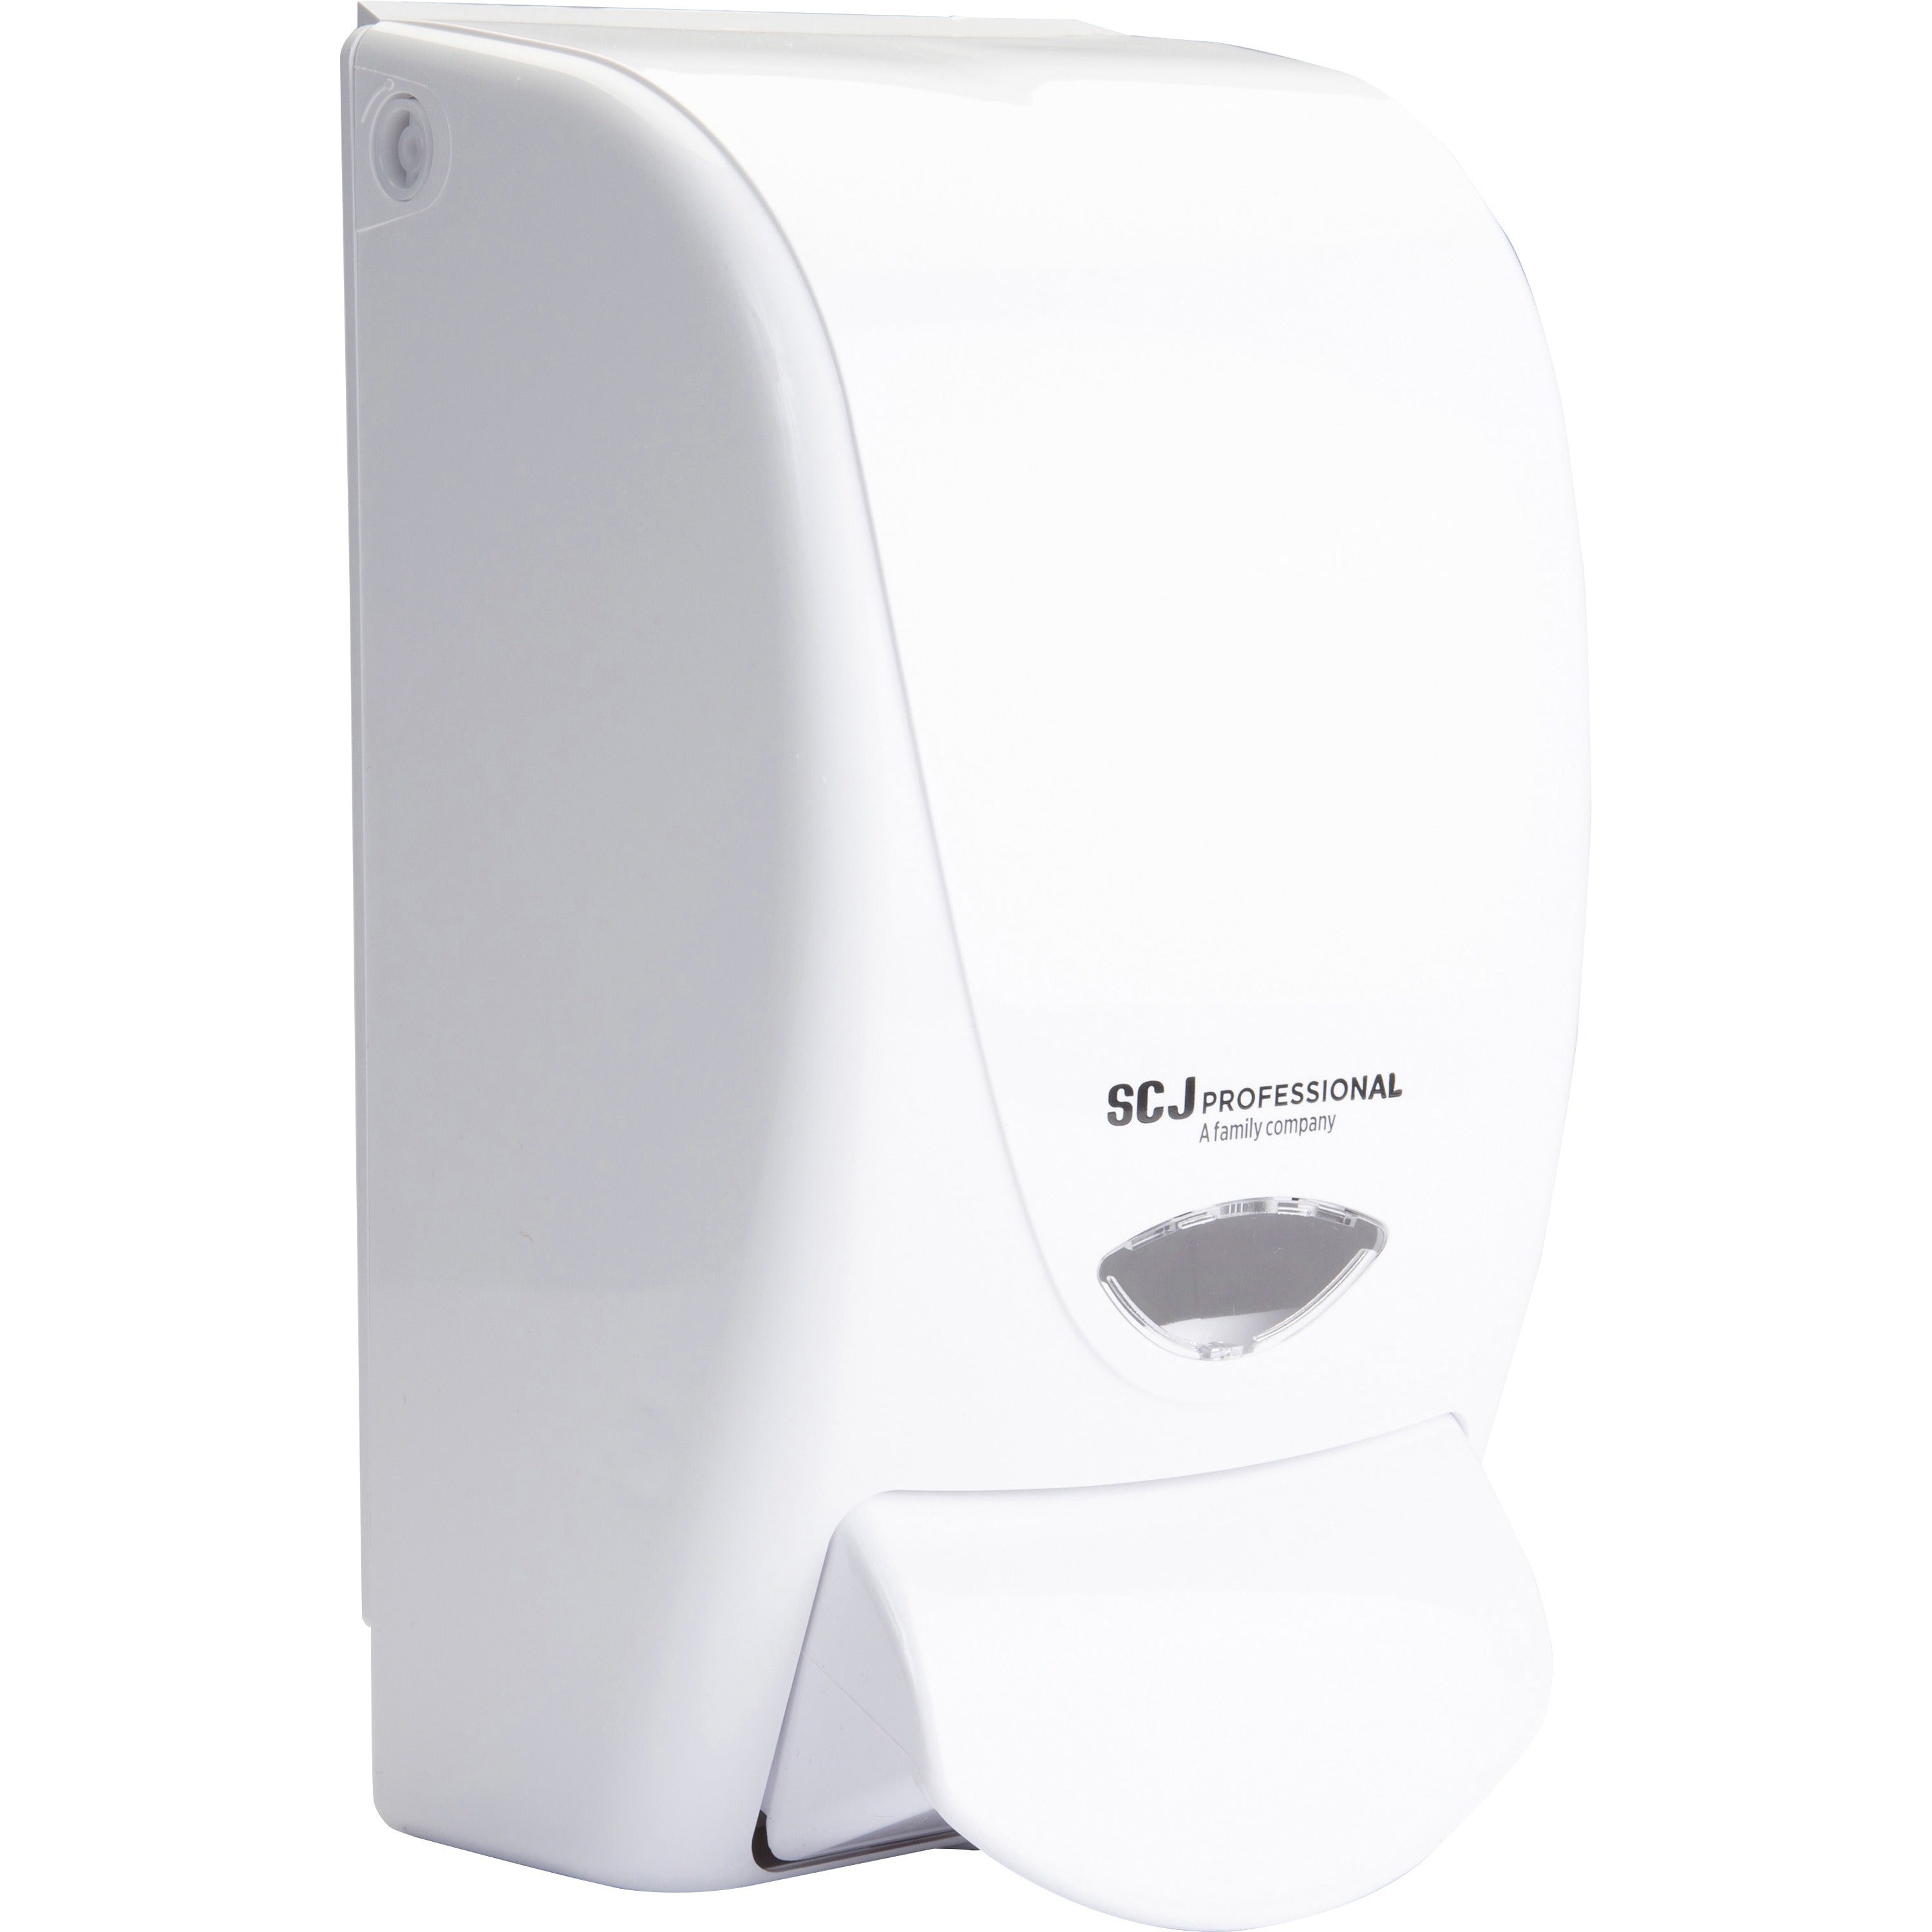 sc-johnson-proline-curve-manual-dispenser-manual-106-quart-capacity-durable-antimicrobial-anti-bacterial-white-1each_sjnwhb1lds - 5